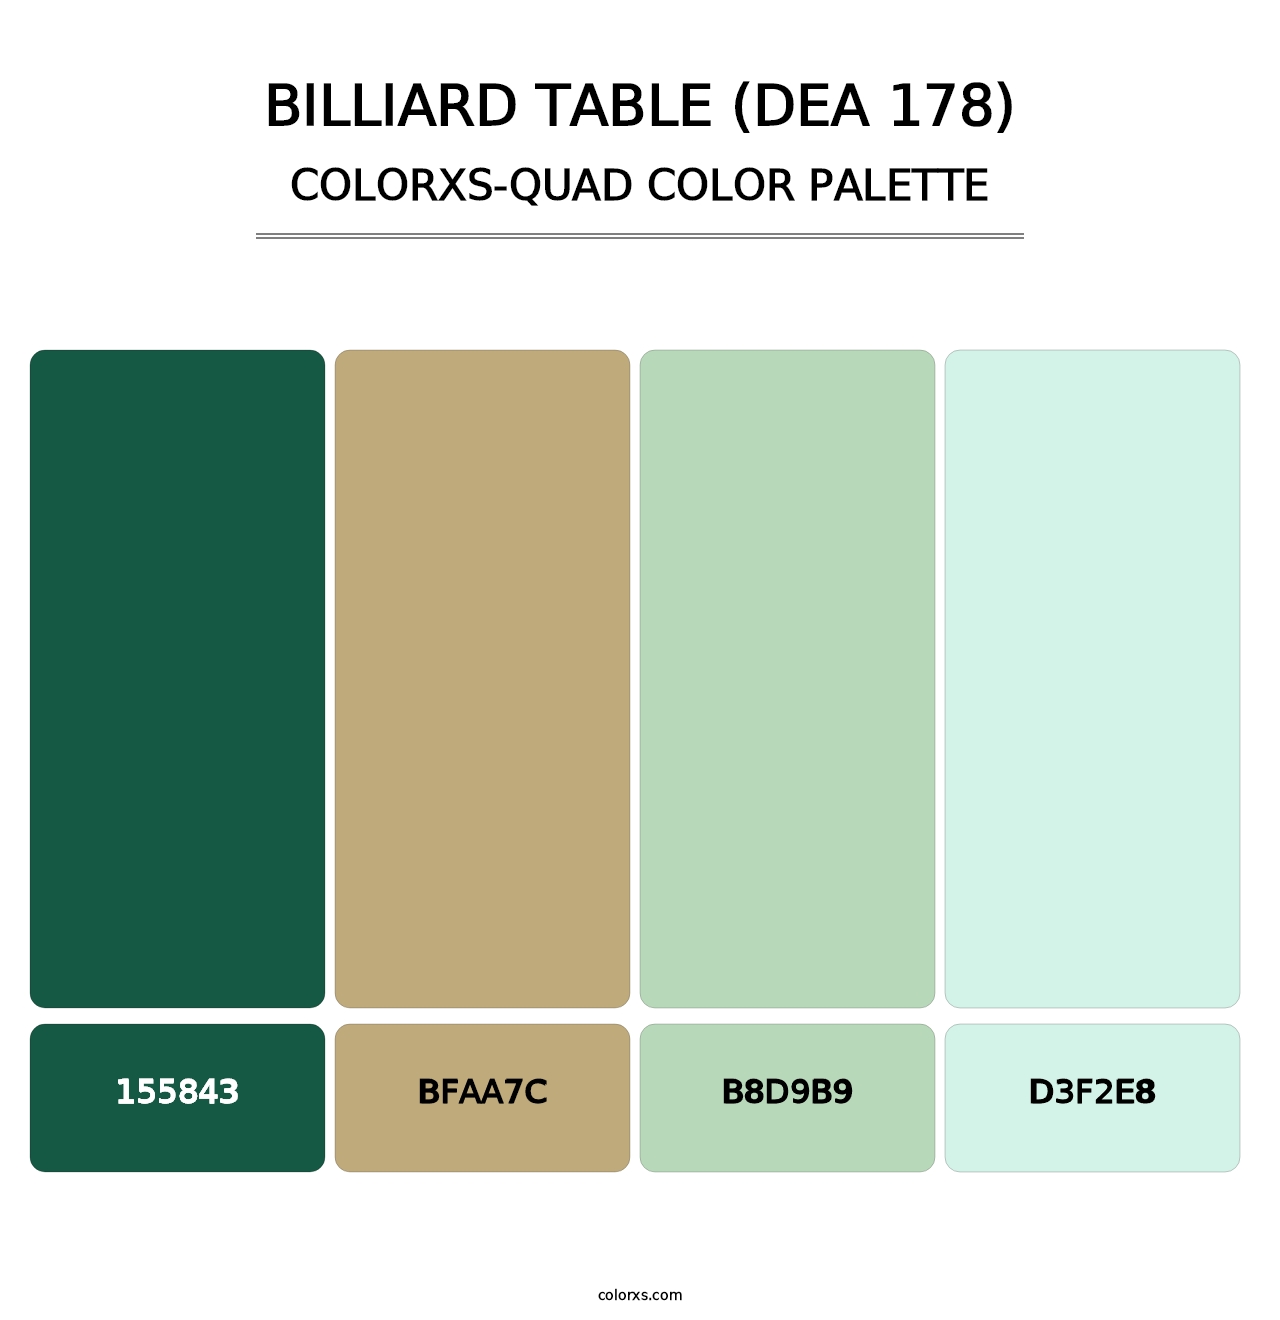 Billiard Table (DEA 178) - Colorxs Quad Palette